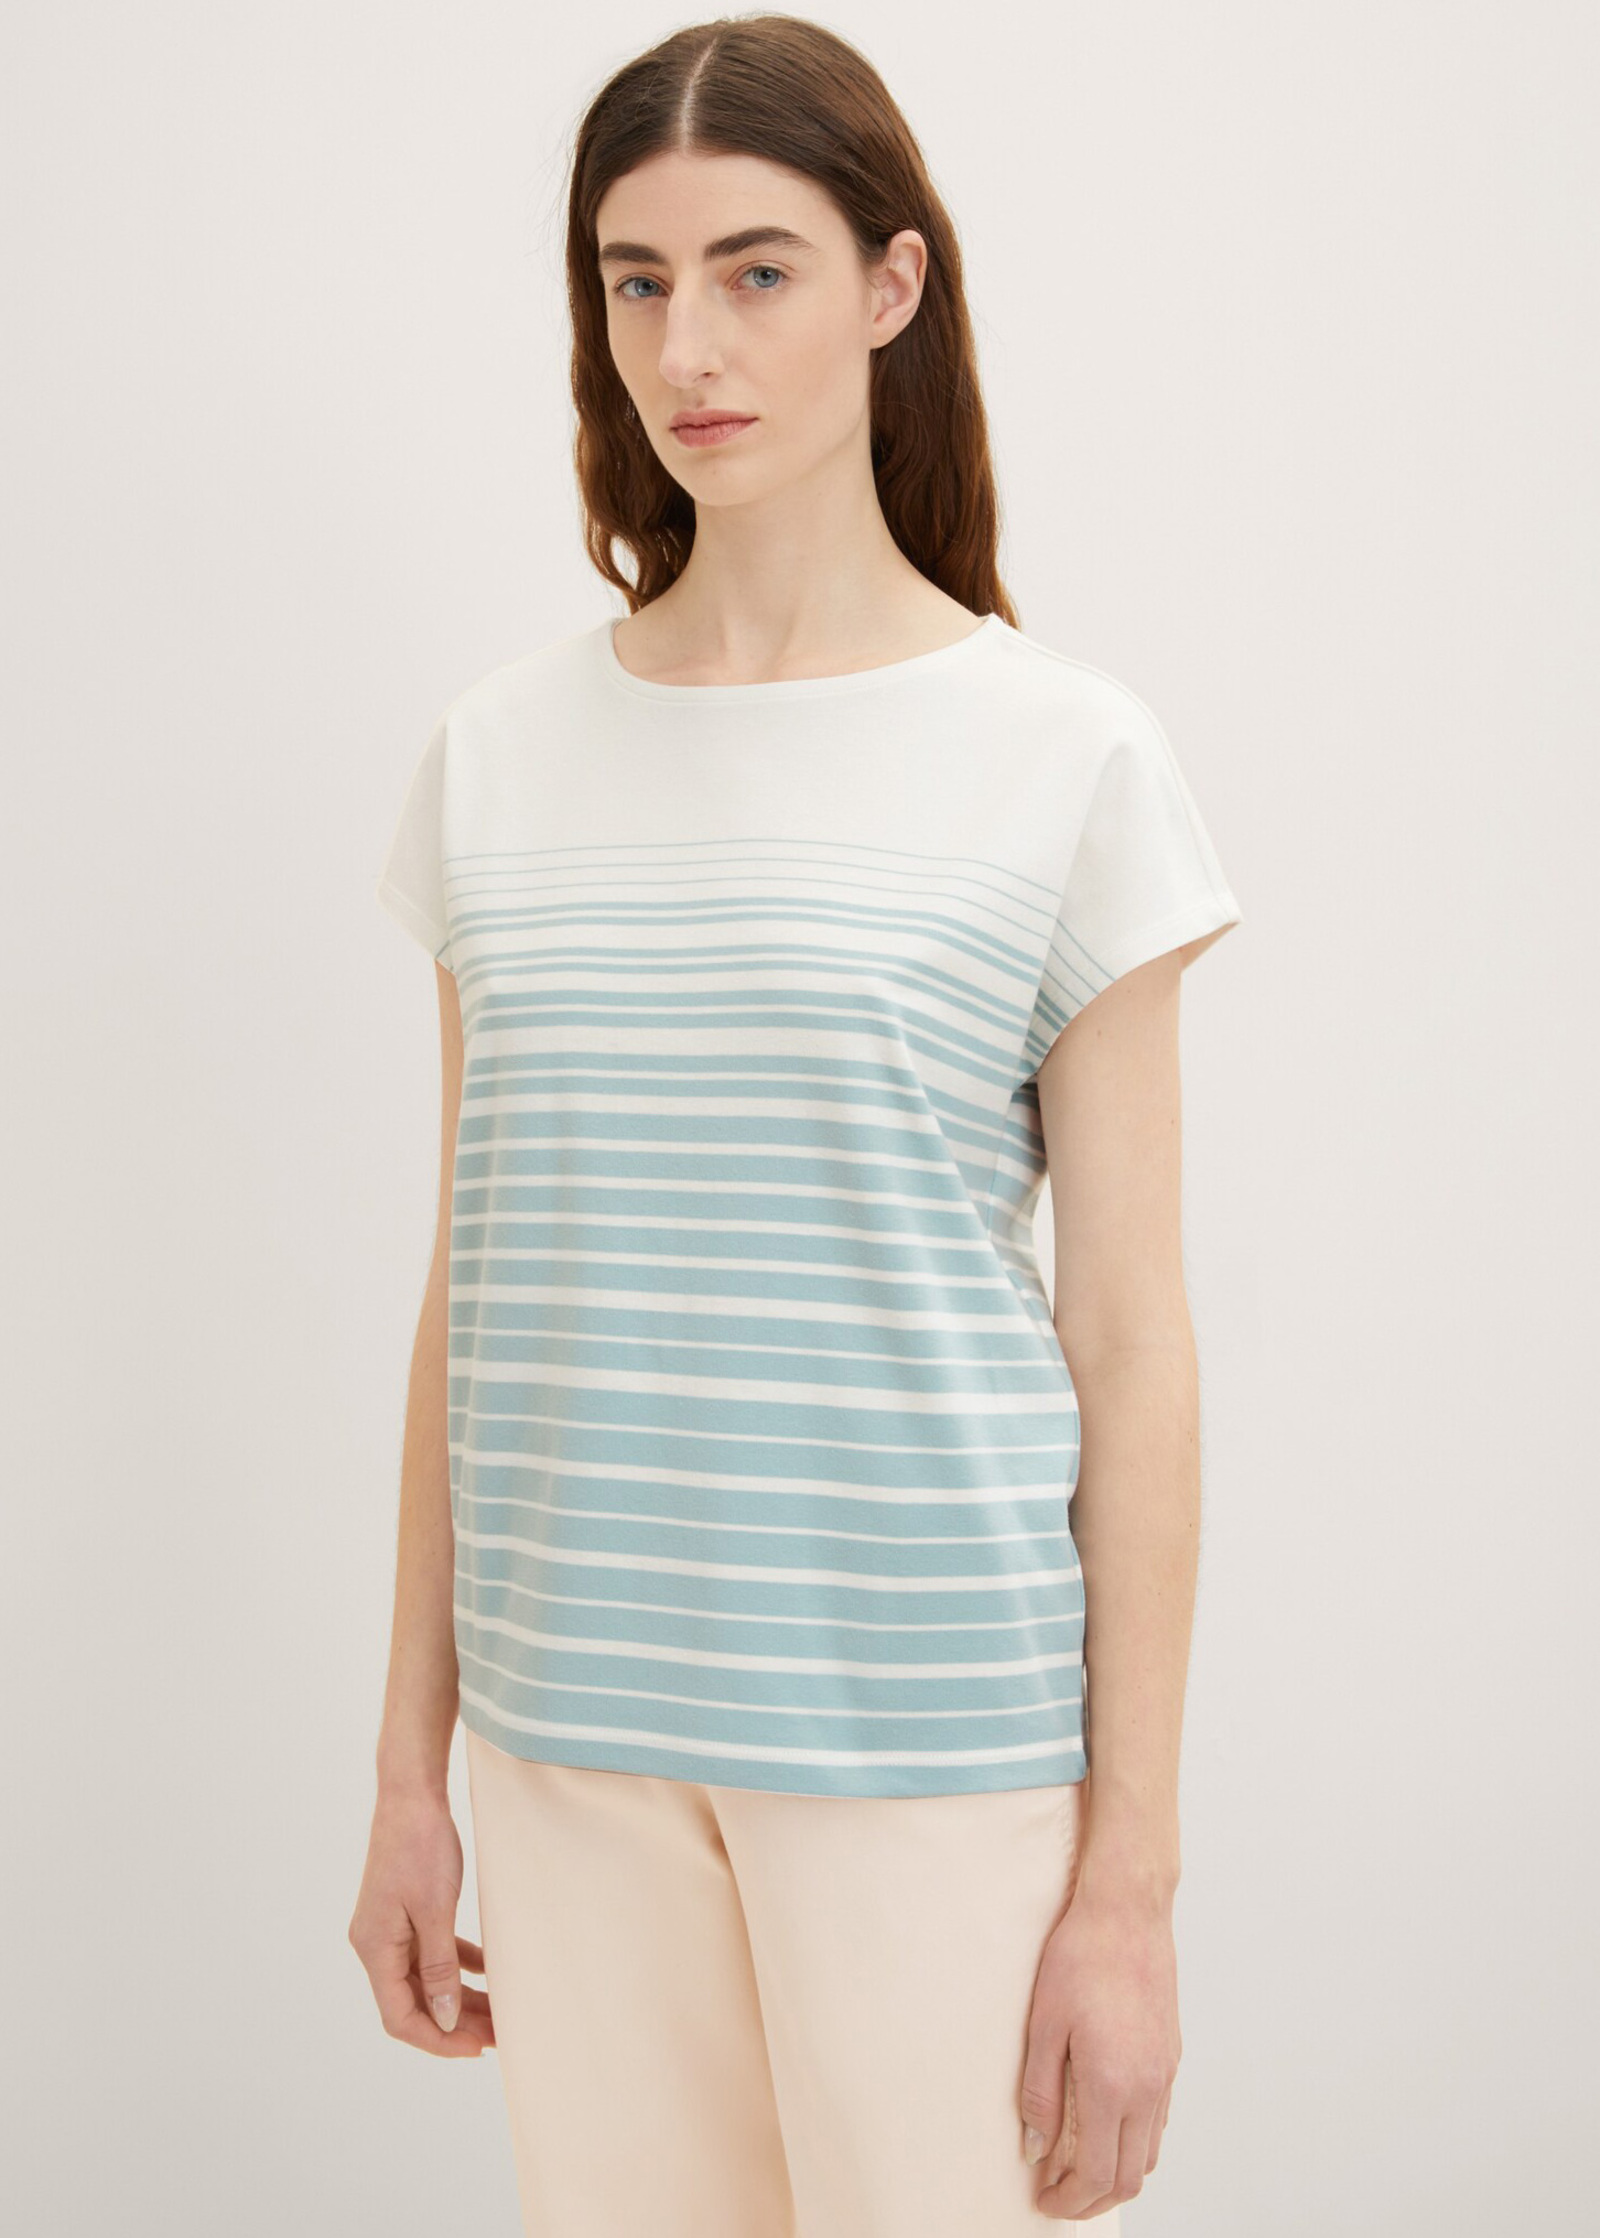 Tom Tailor Tshirt - Stripe Gradient Blue 1035480-31328 L Size